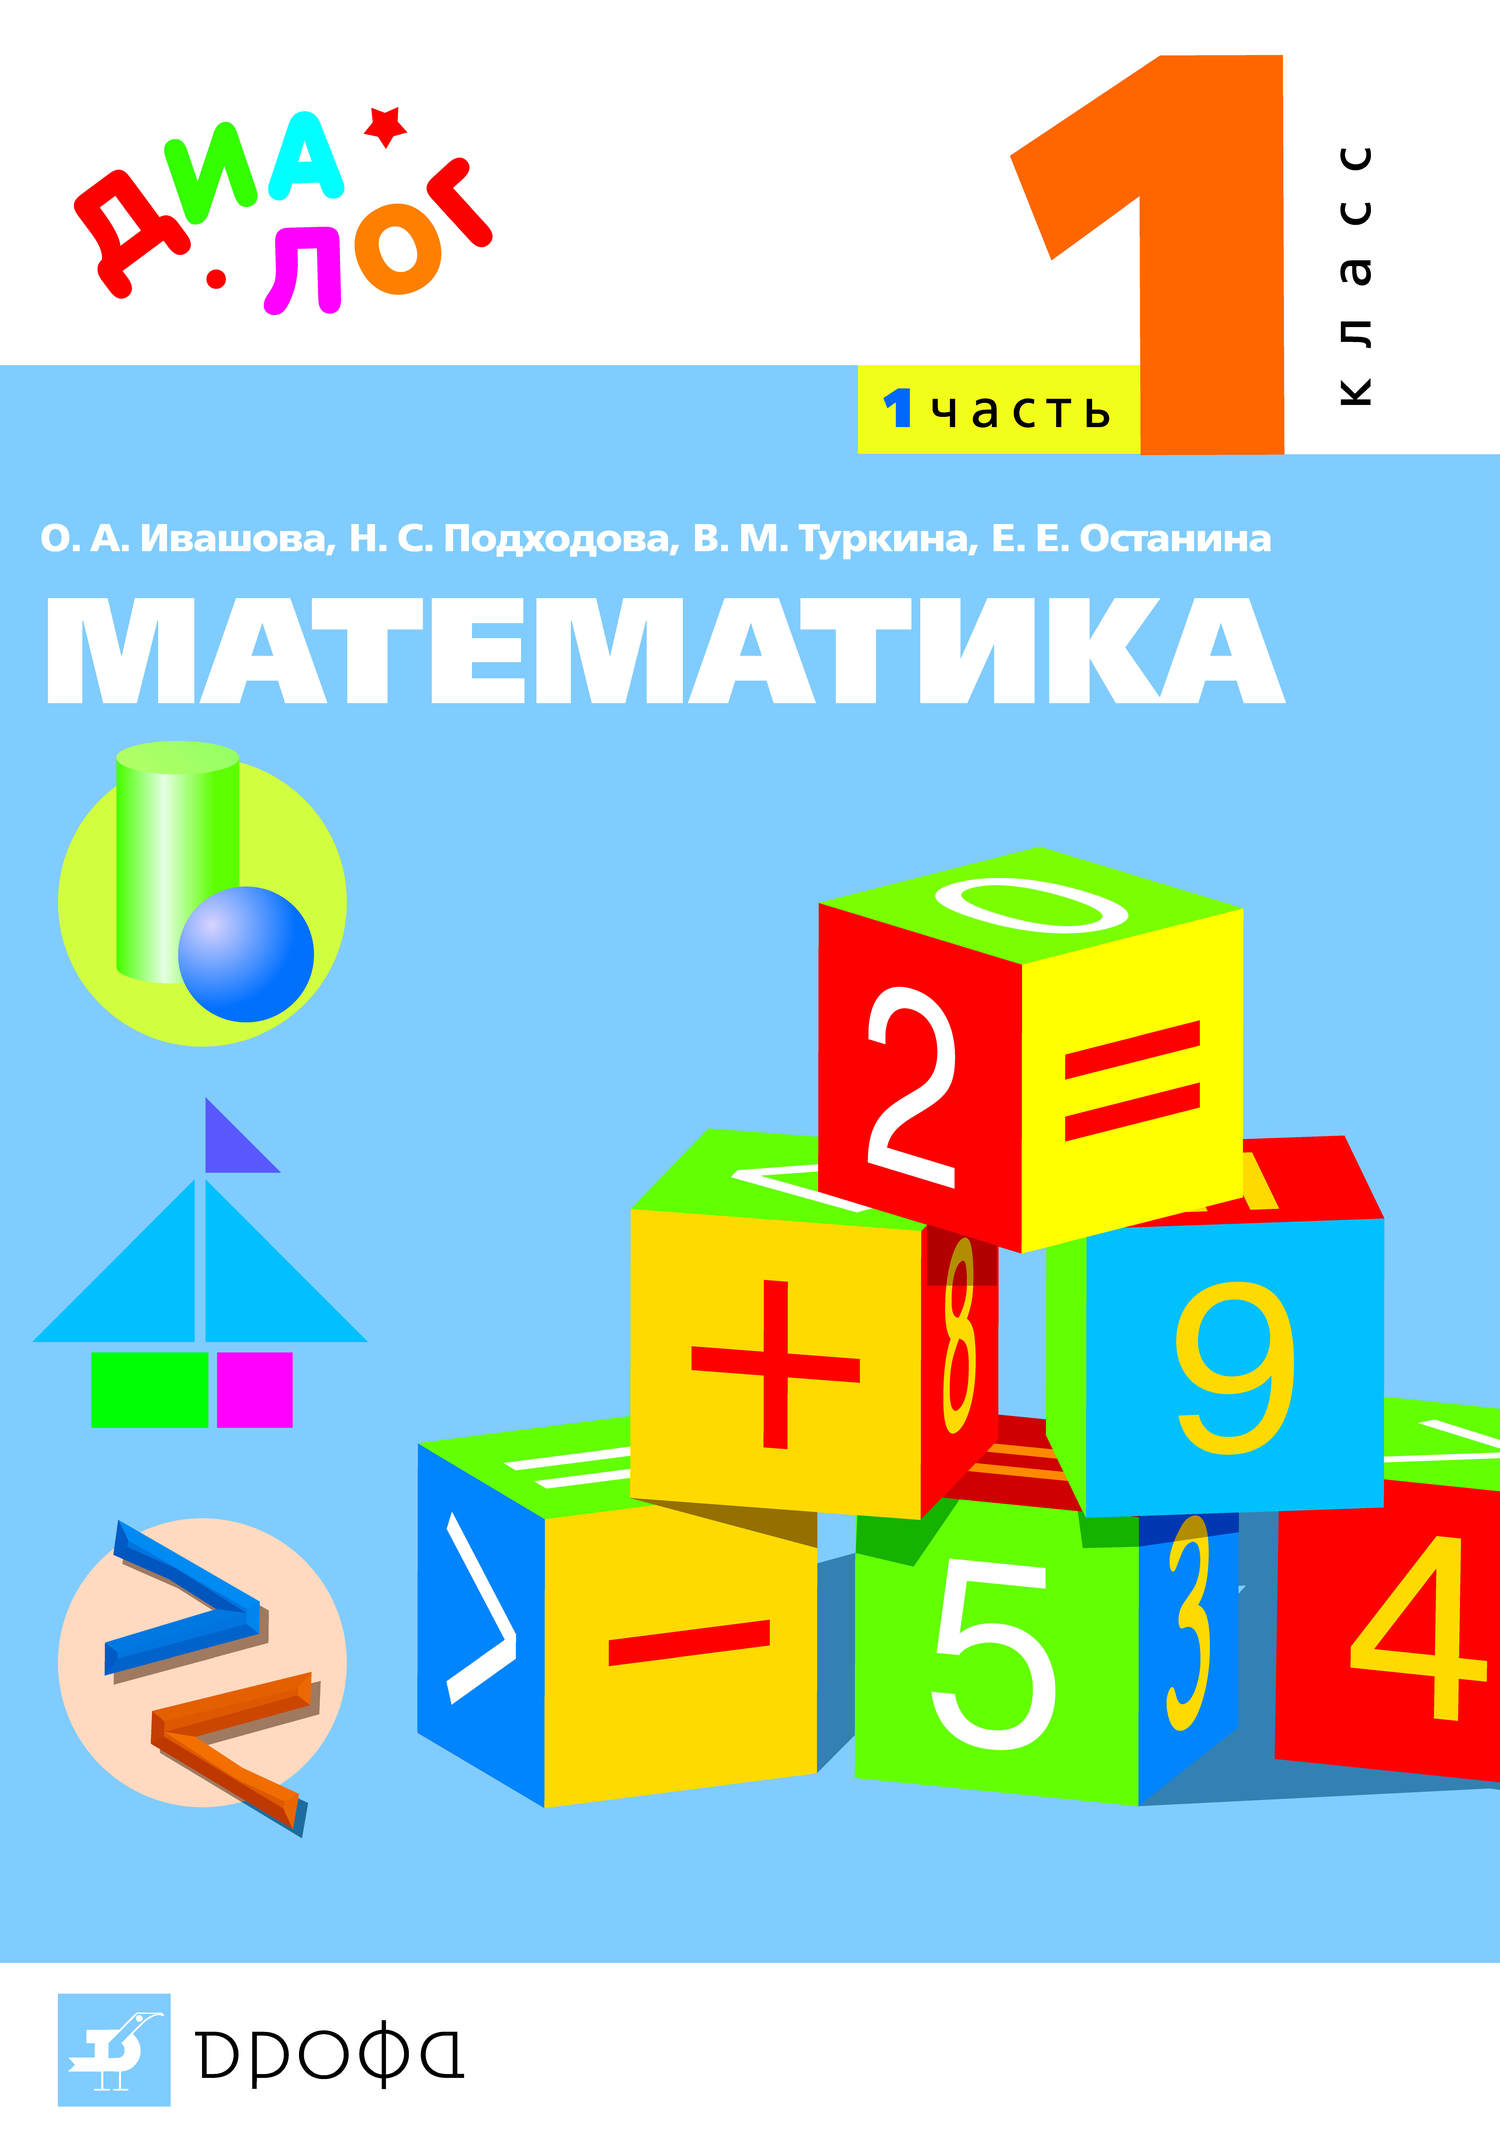 Математика б кл. Учебник математики. Книга математика. Учебник математики 1 класс. Книга математика 1 класс.